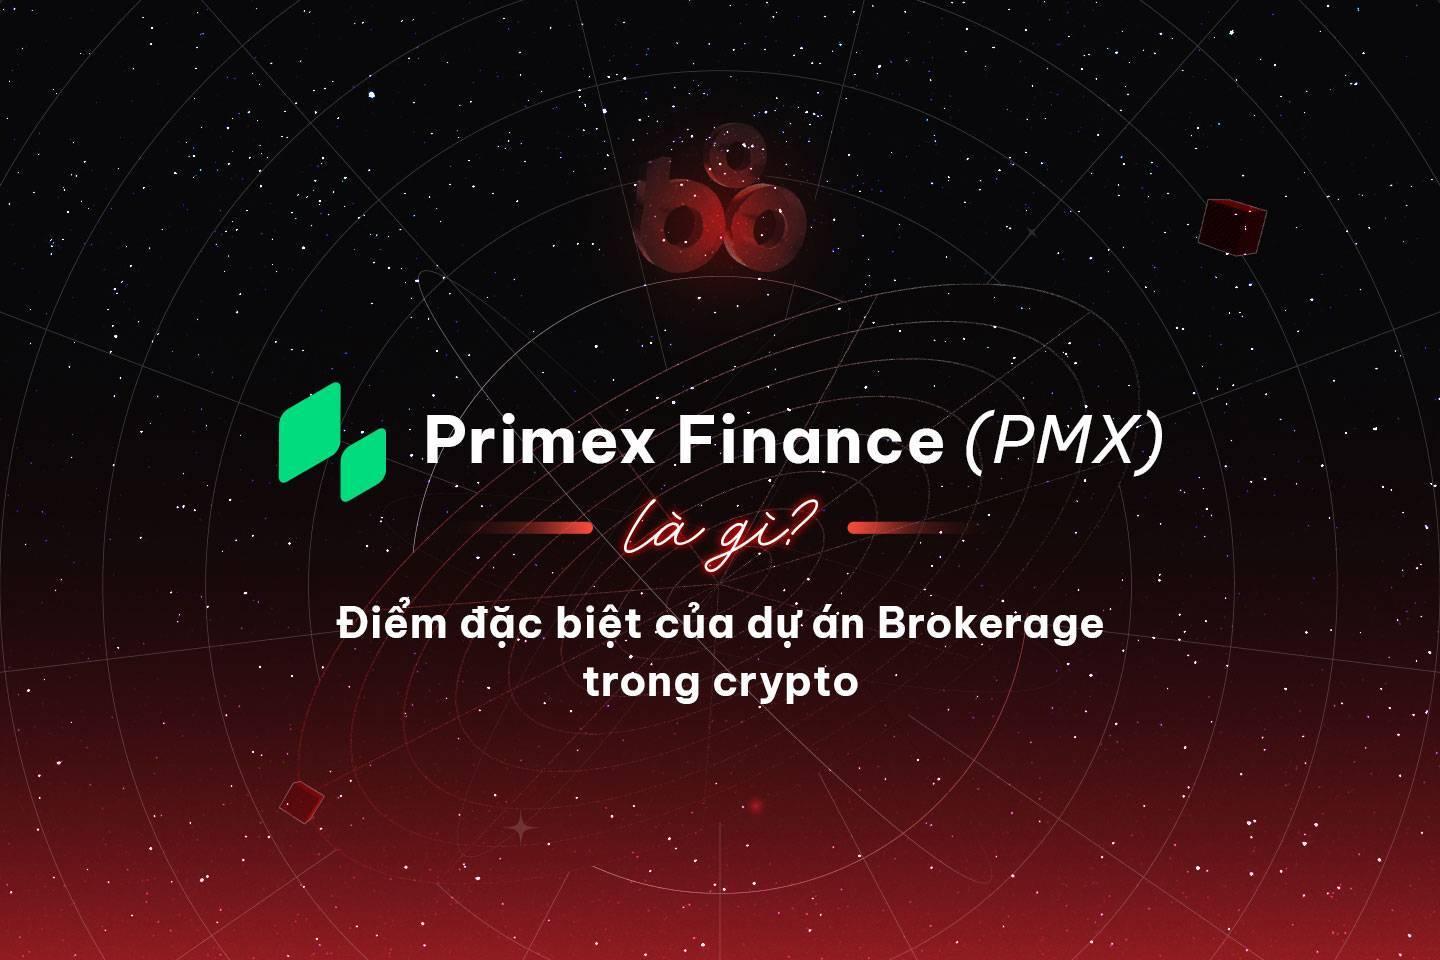 primex-finance-pmx-la-gi-diem-dac-biet-cua-du-an-brokerage-trong-crypto